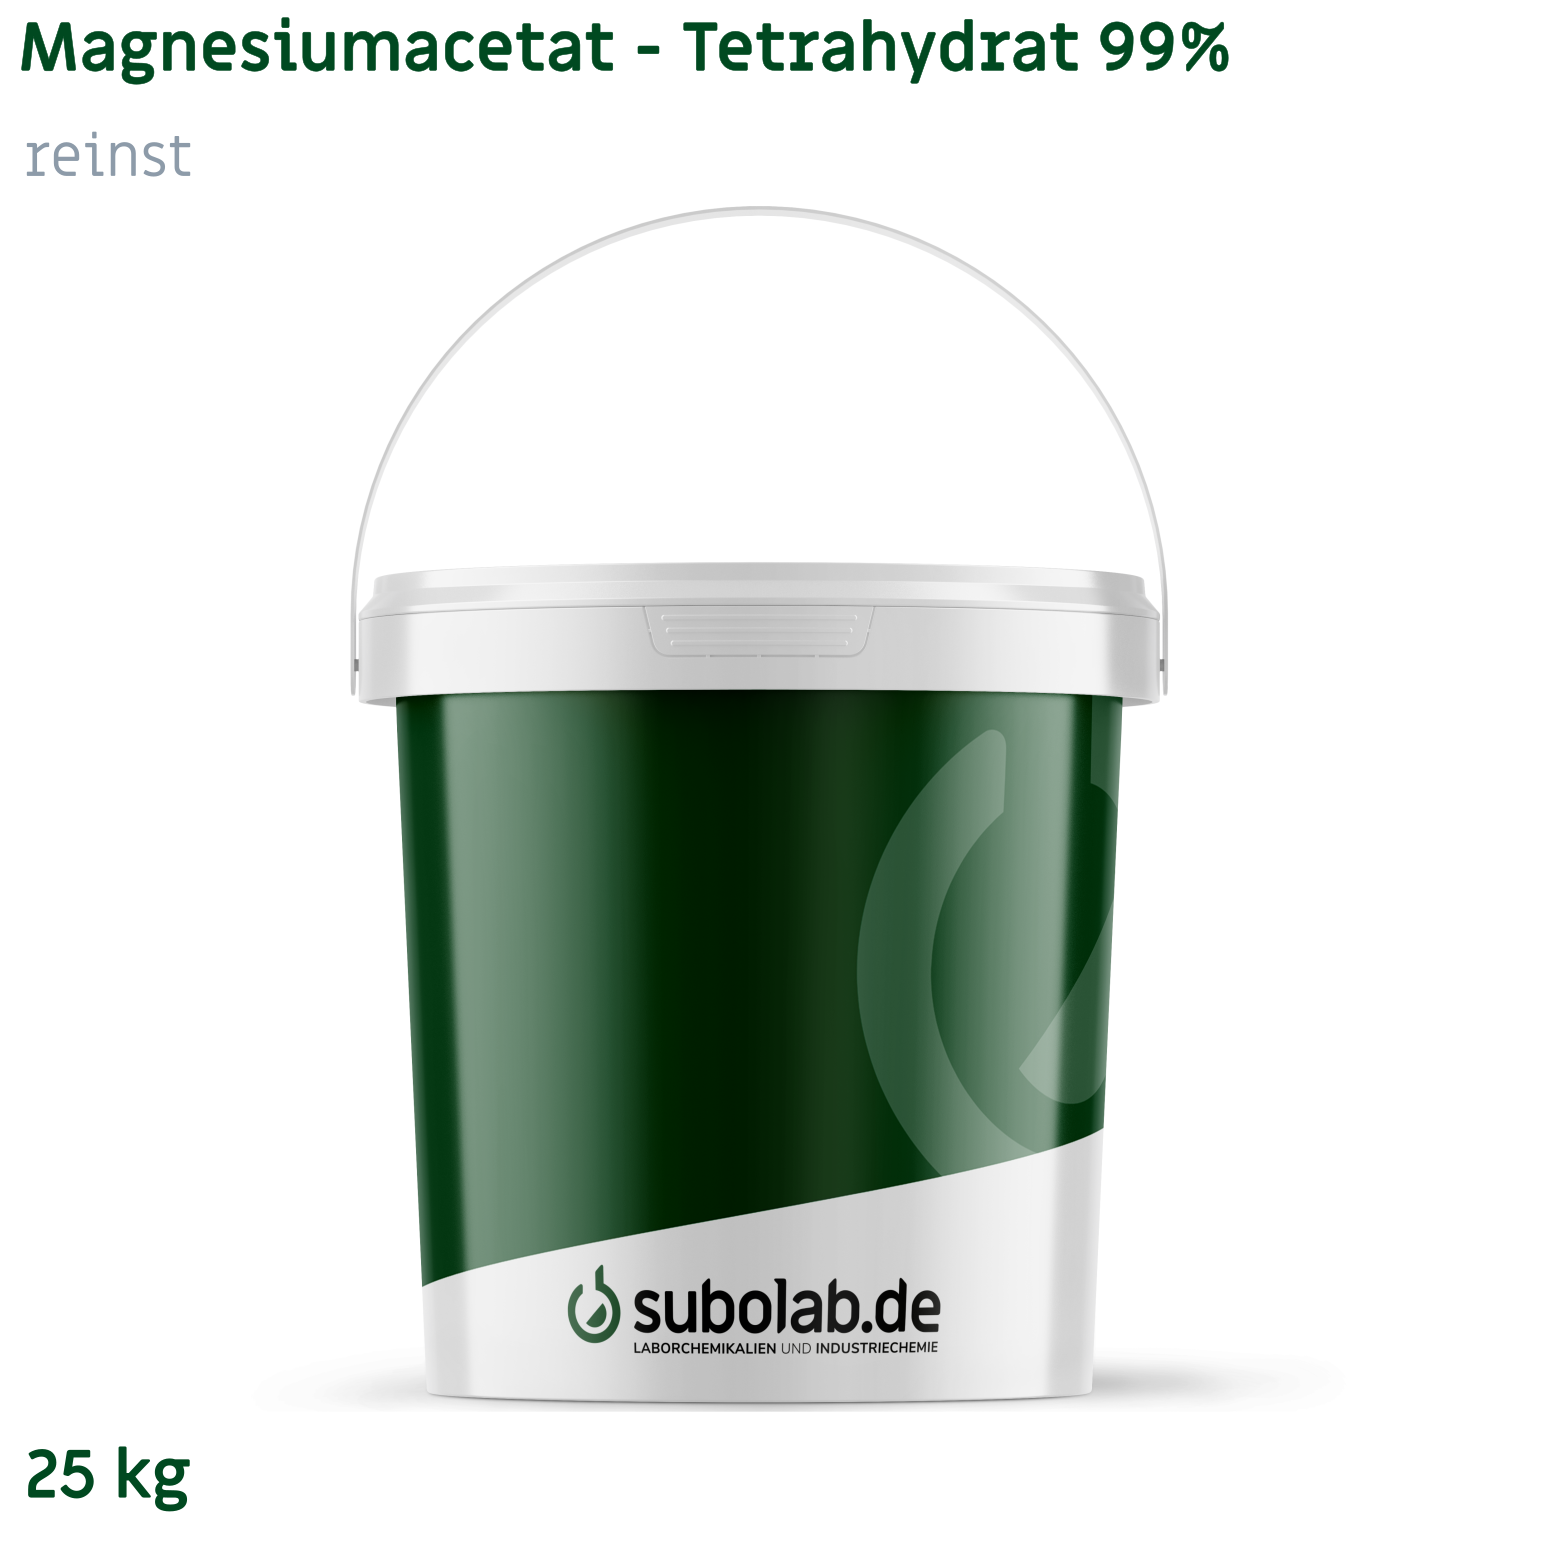 Bild von Magnesiumacetat - Tetrahydrat 99% reinst (25 kg)